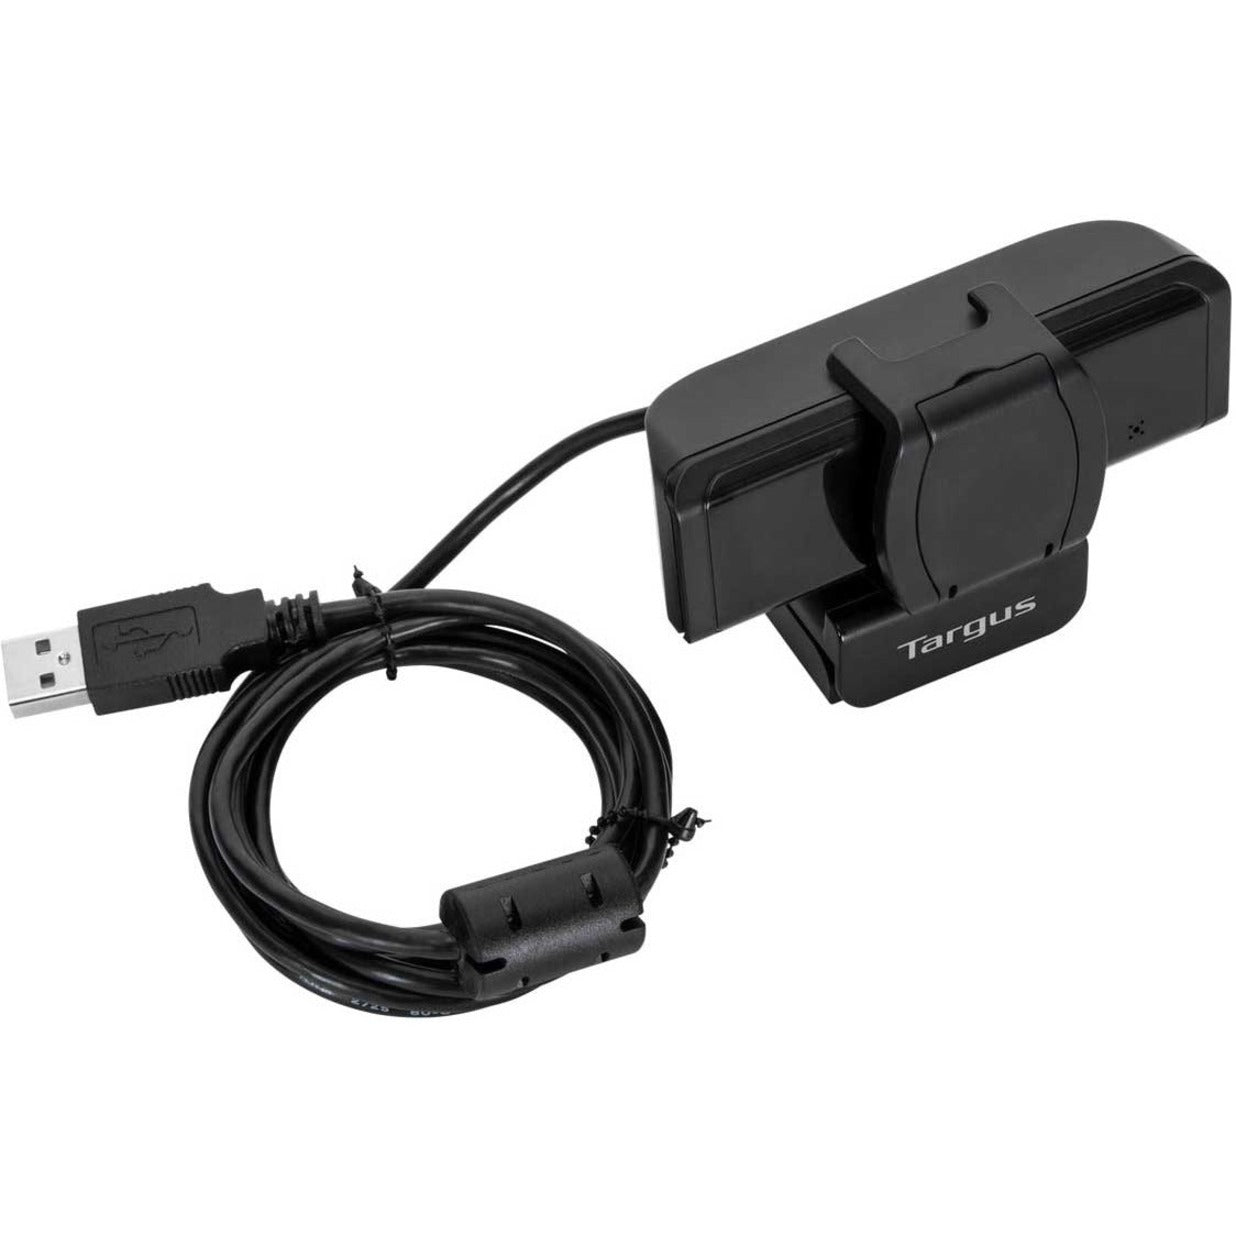 Targus AVC041GL Webcam Pro - Full HD 1080p Webcam with Flip Privacy Cover, 30 fps, Black, USB Type A